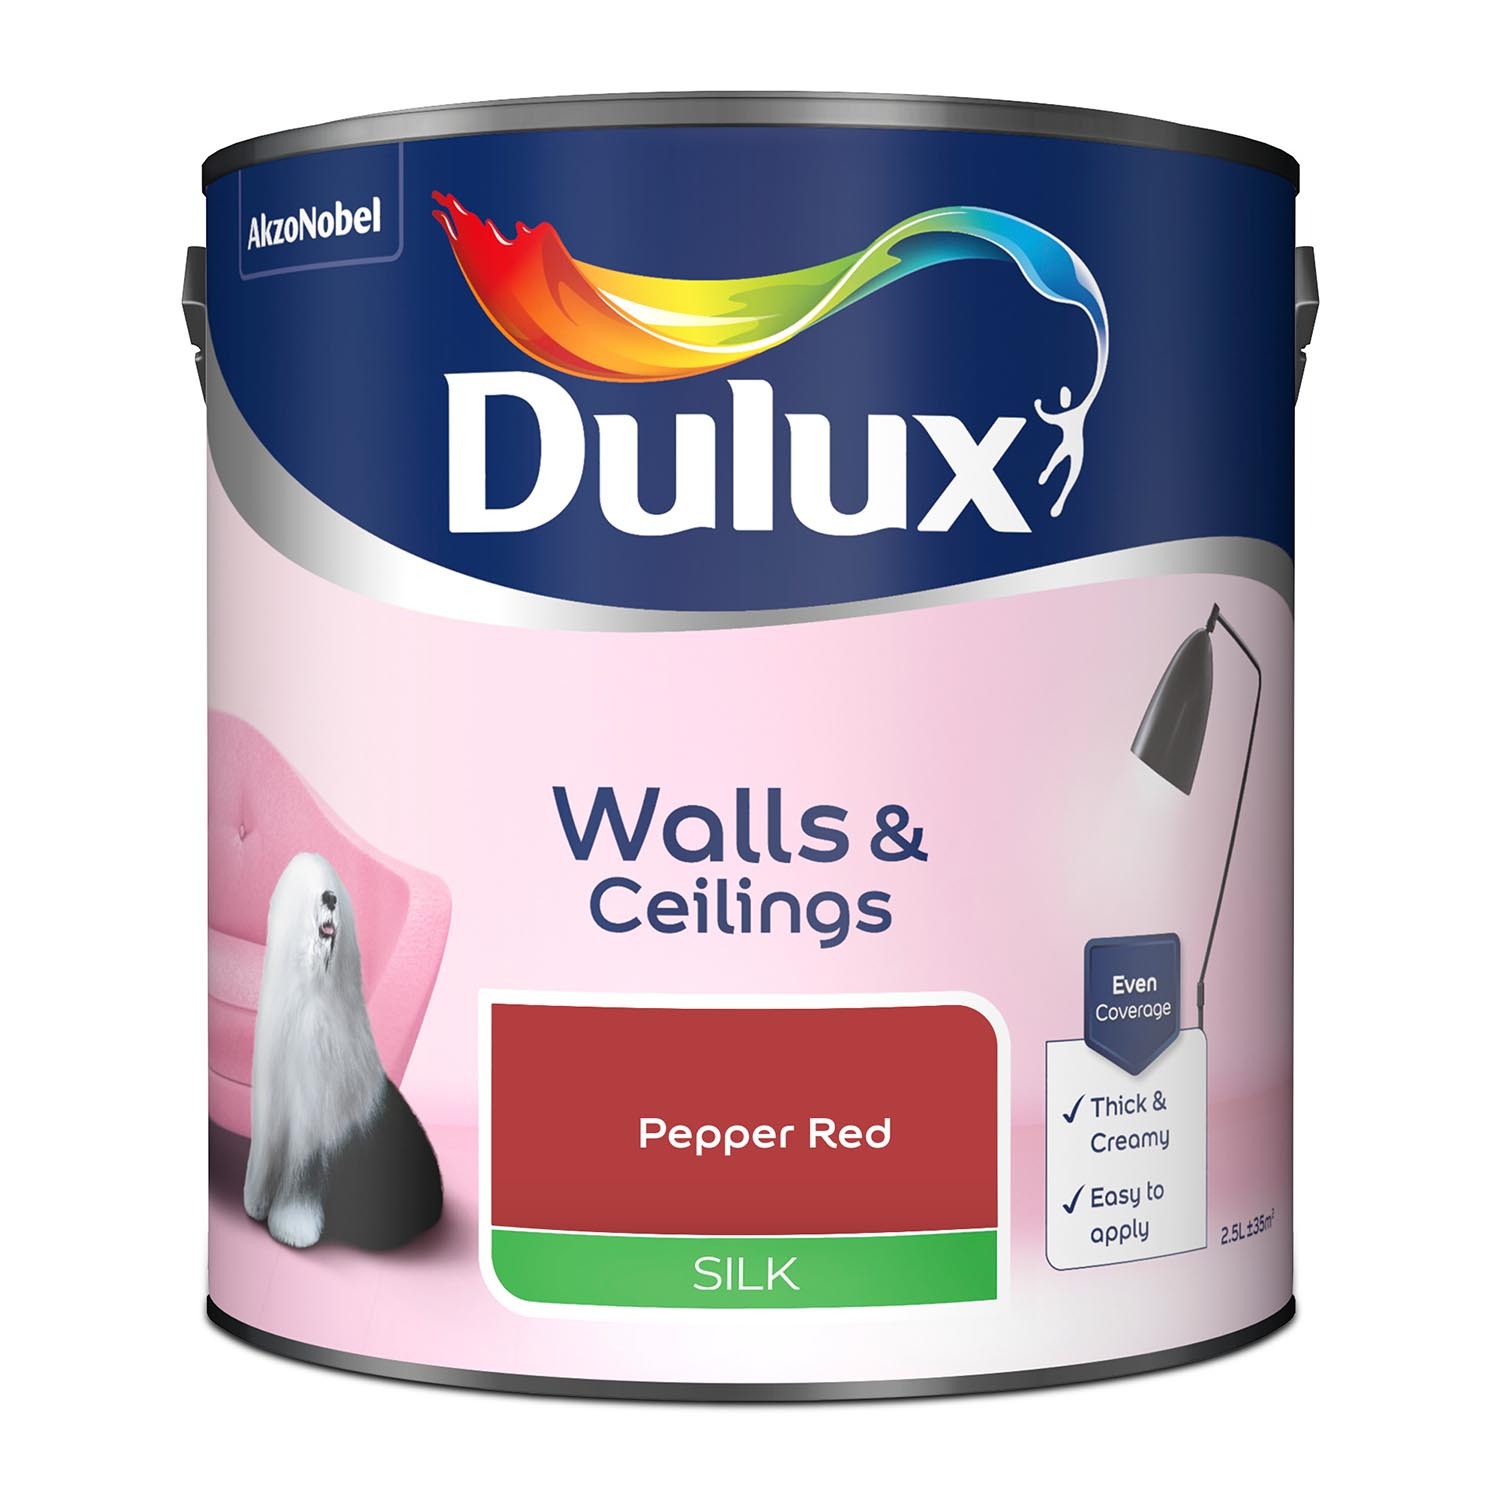 Dulux Walls & Ceilings Pepper Red Silk Emulsion Paint 2.5L Image 2